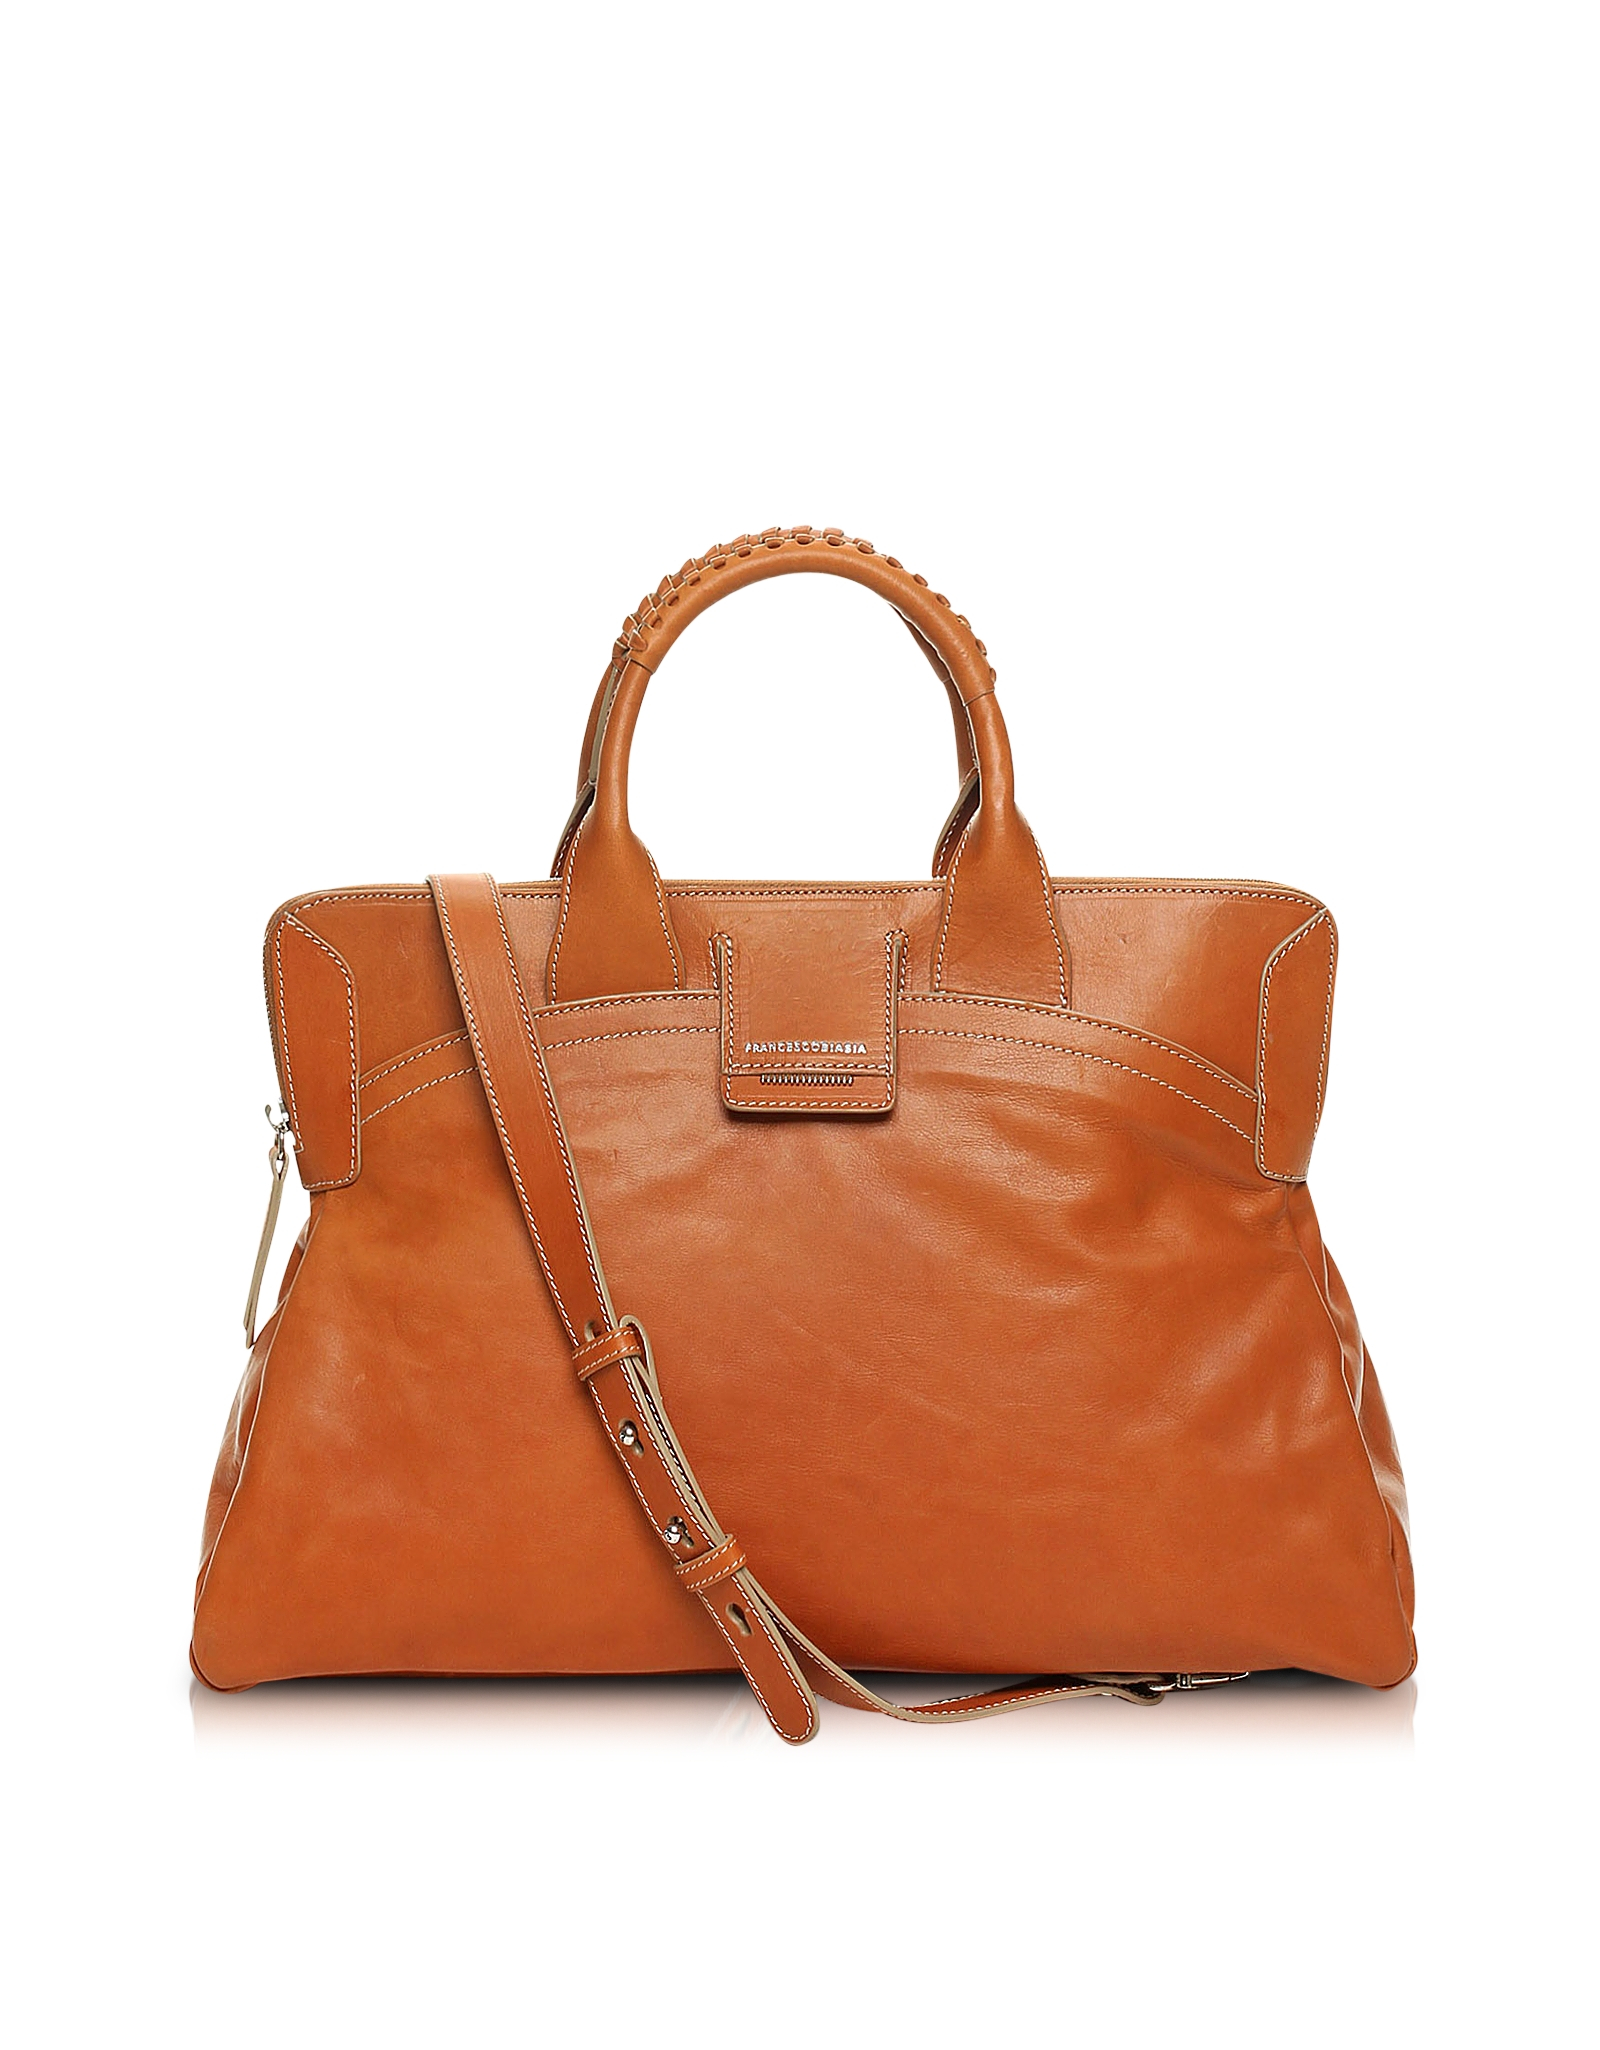 Francesco biasia Camden Brown Leather Handbag in Brown | Lyst